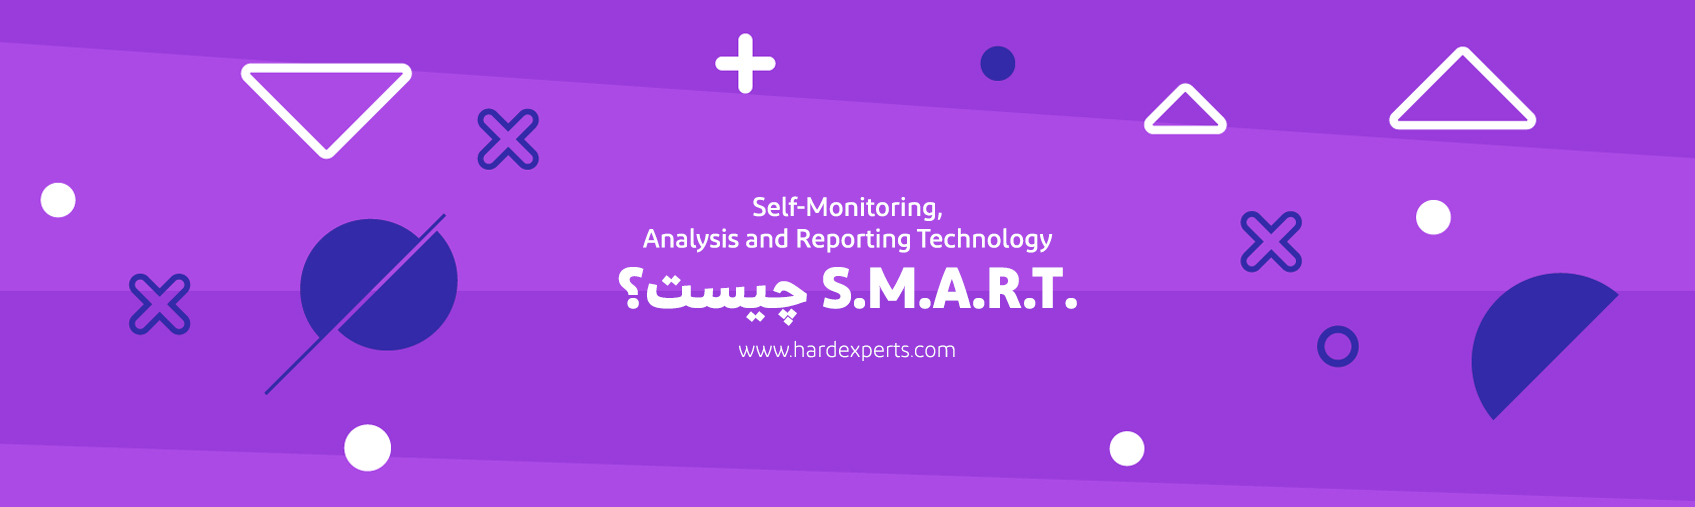 SMART Self-Monitoring